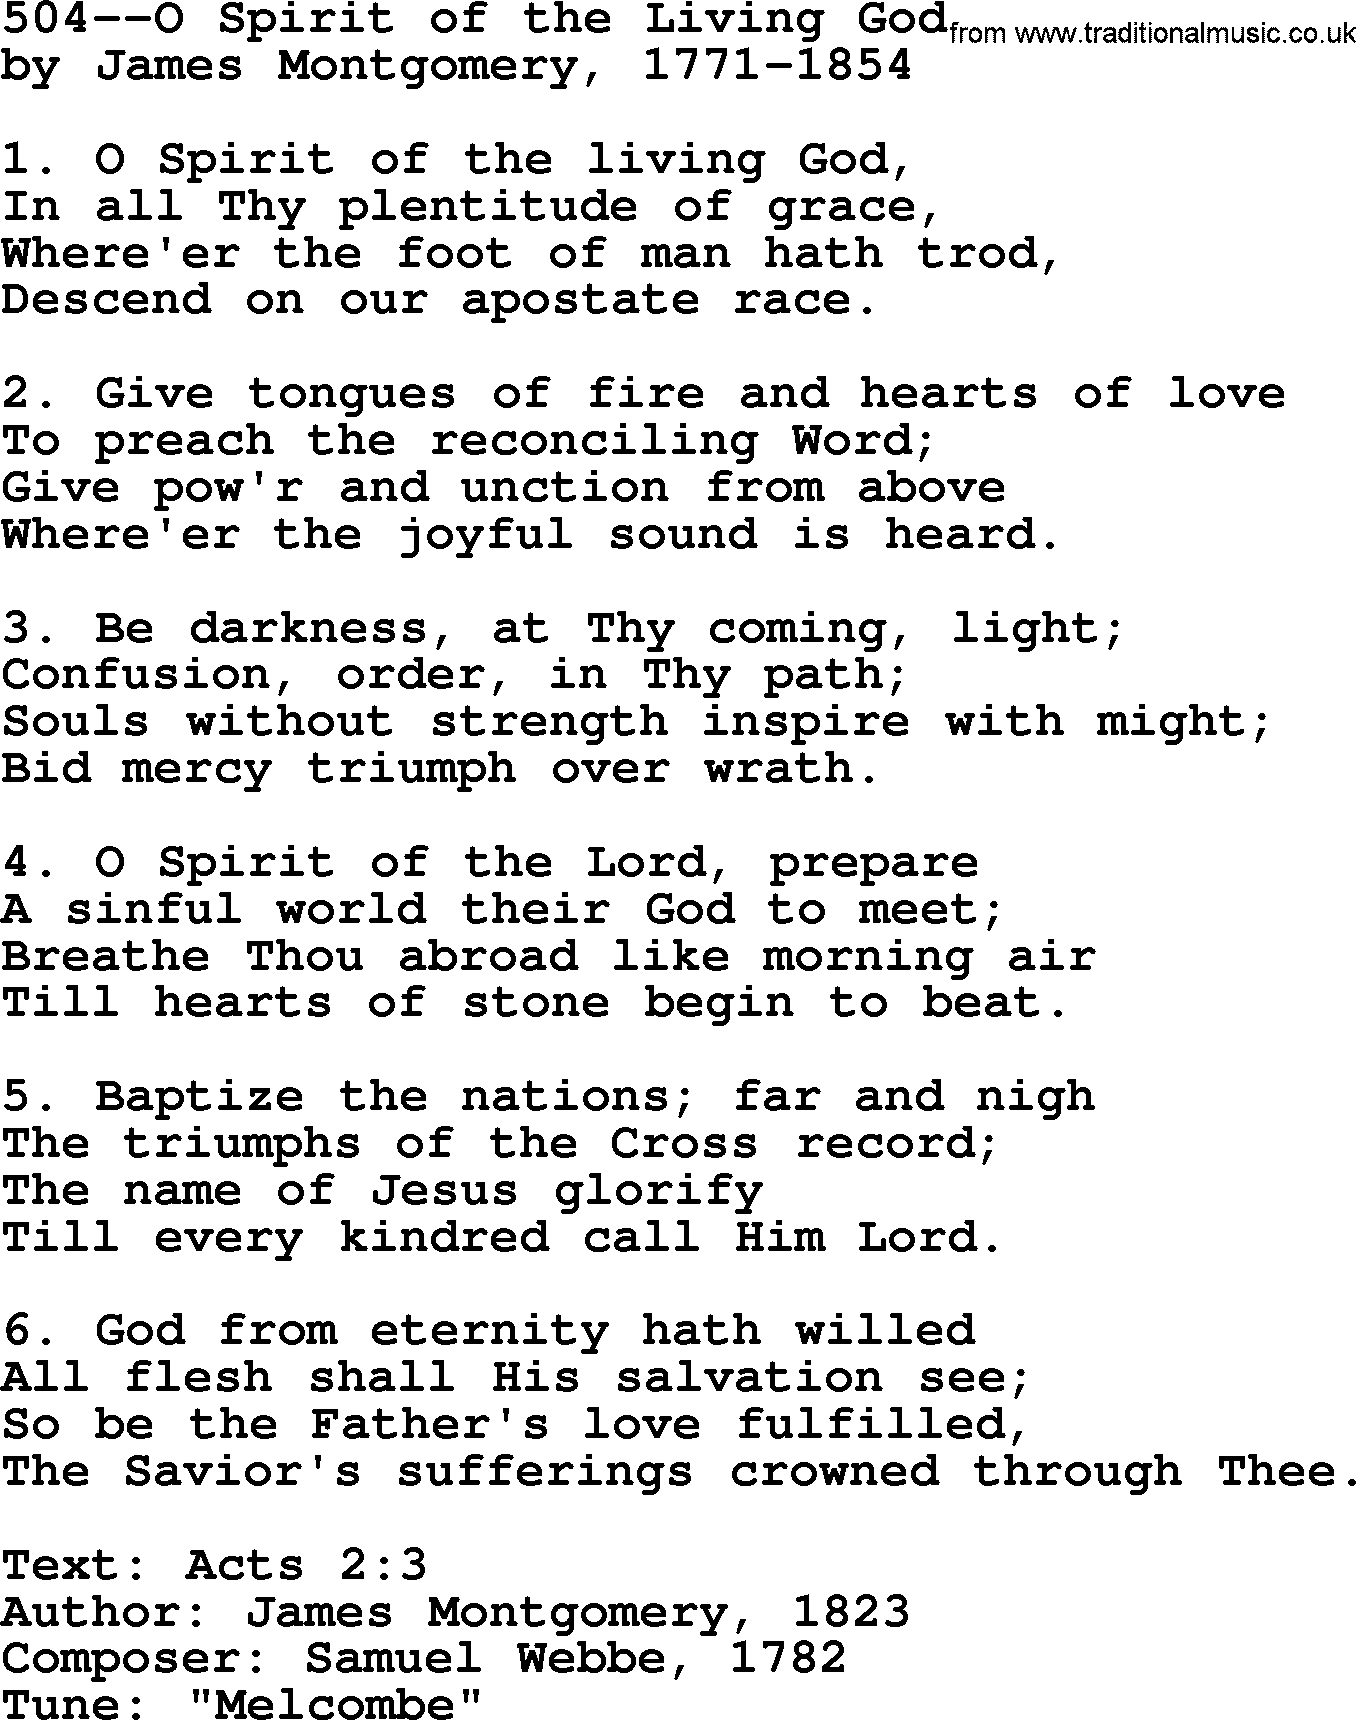 Lutheran Hymn: 504--O Spirit of the Living God.txt lyrics with PDF